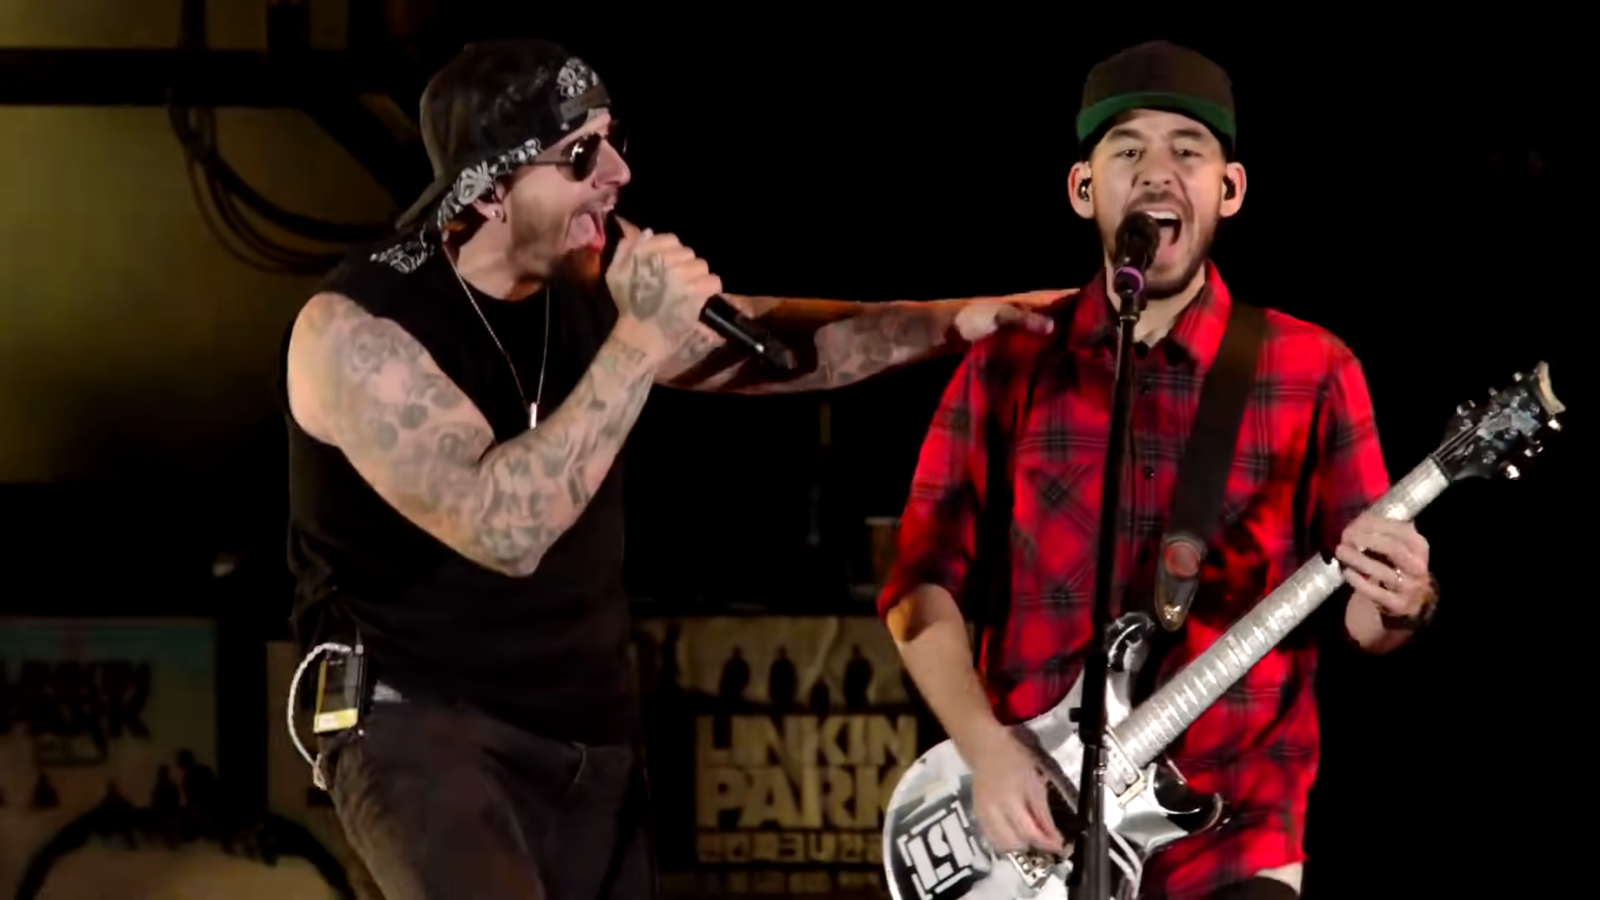 See Linkin Park Play "Faint" With Avenged Sevenfold's M. Shadows and